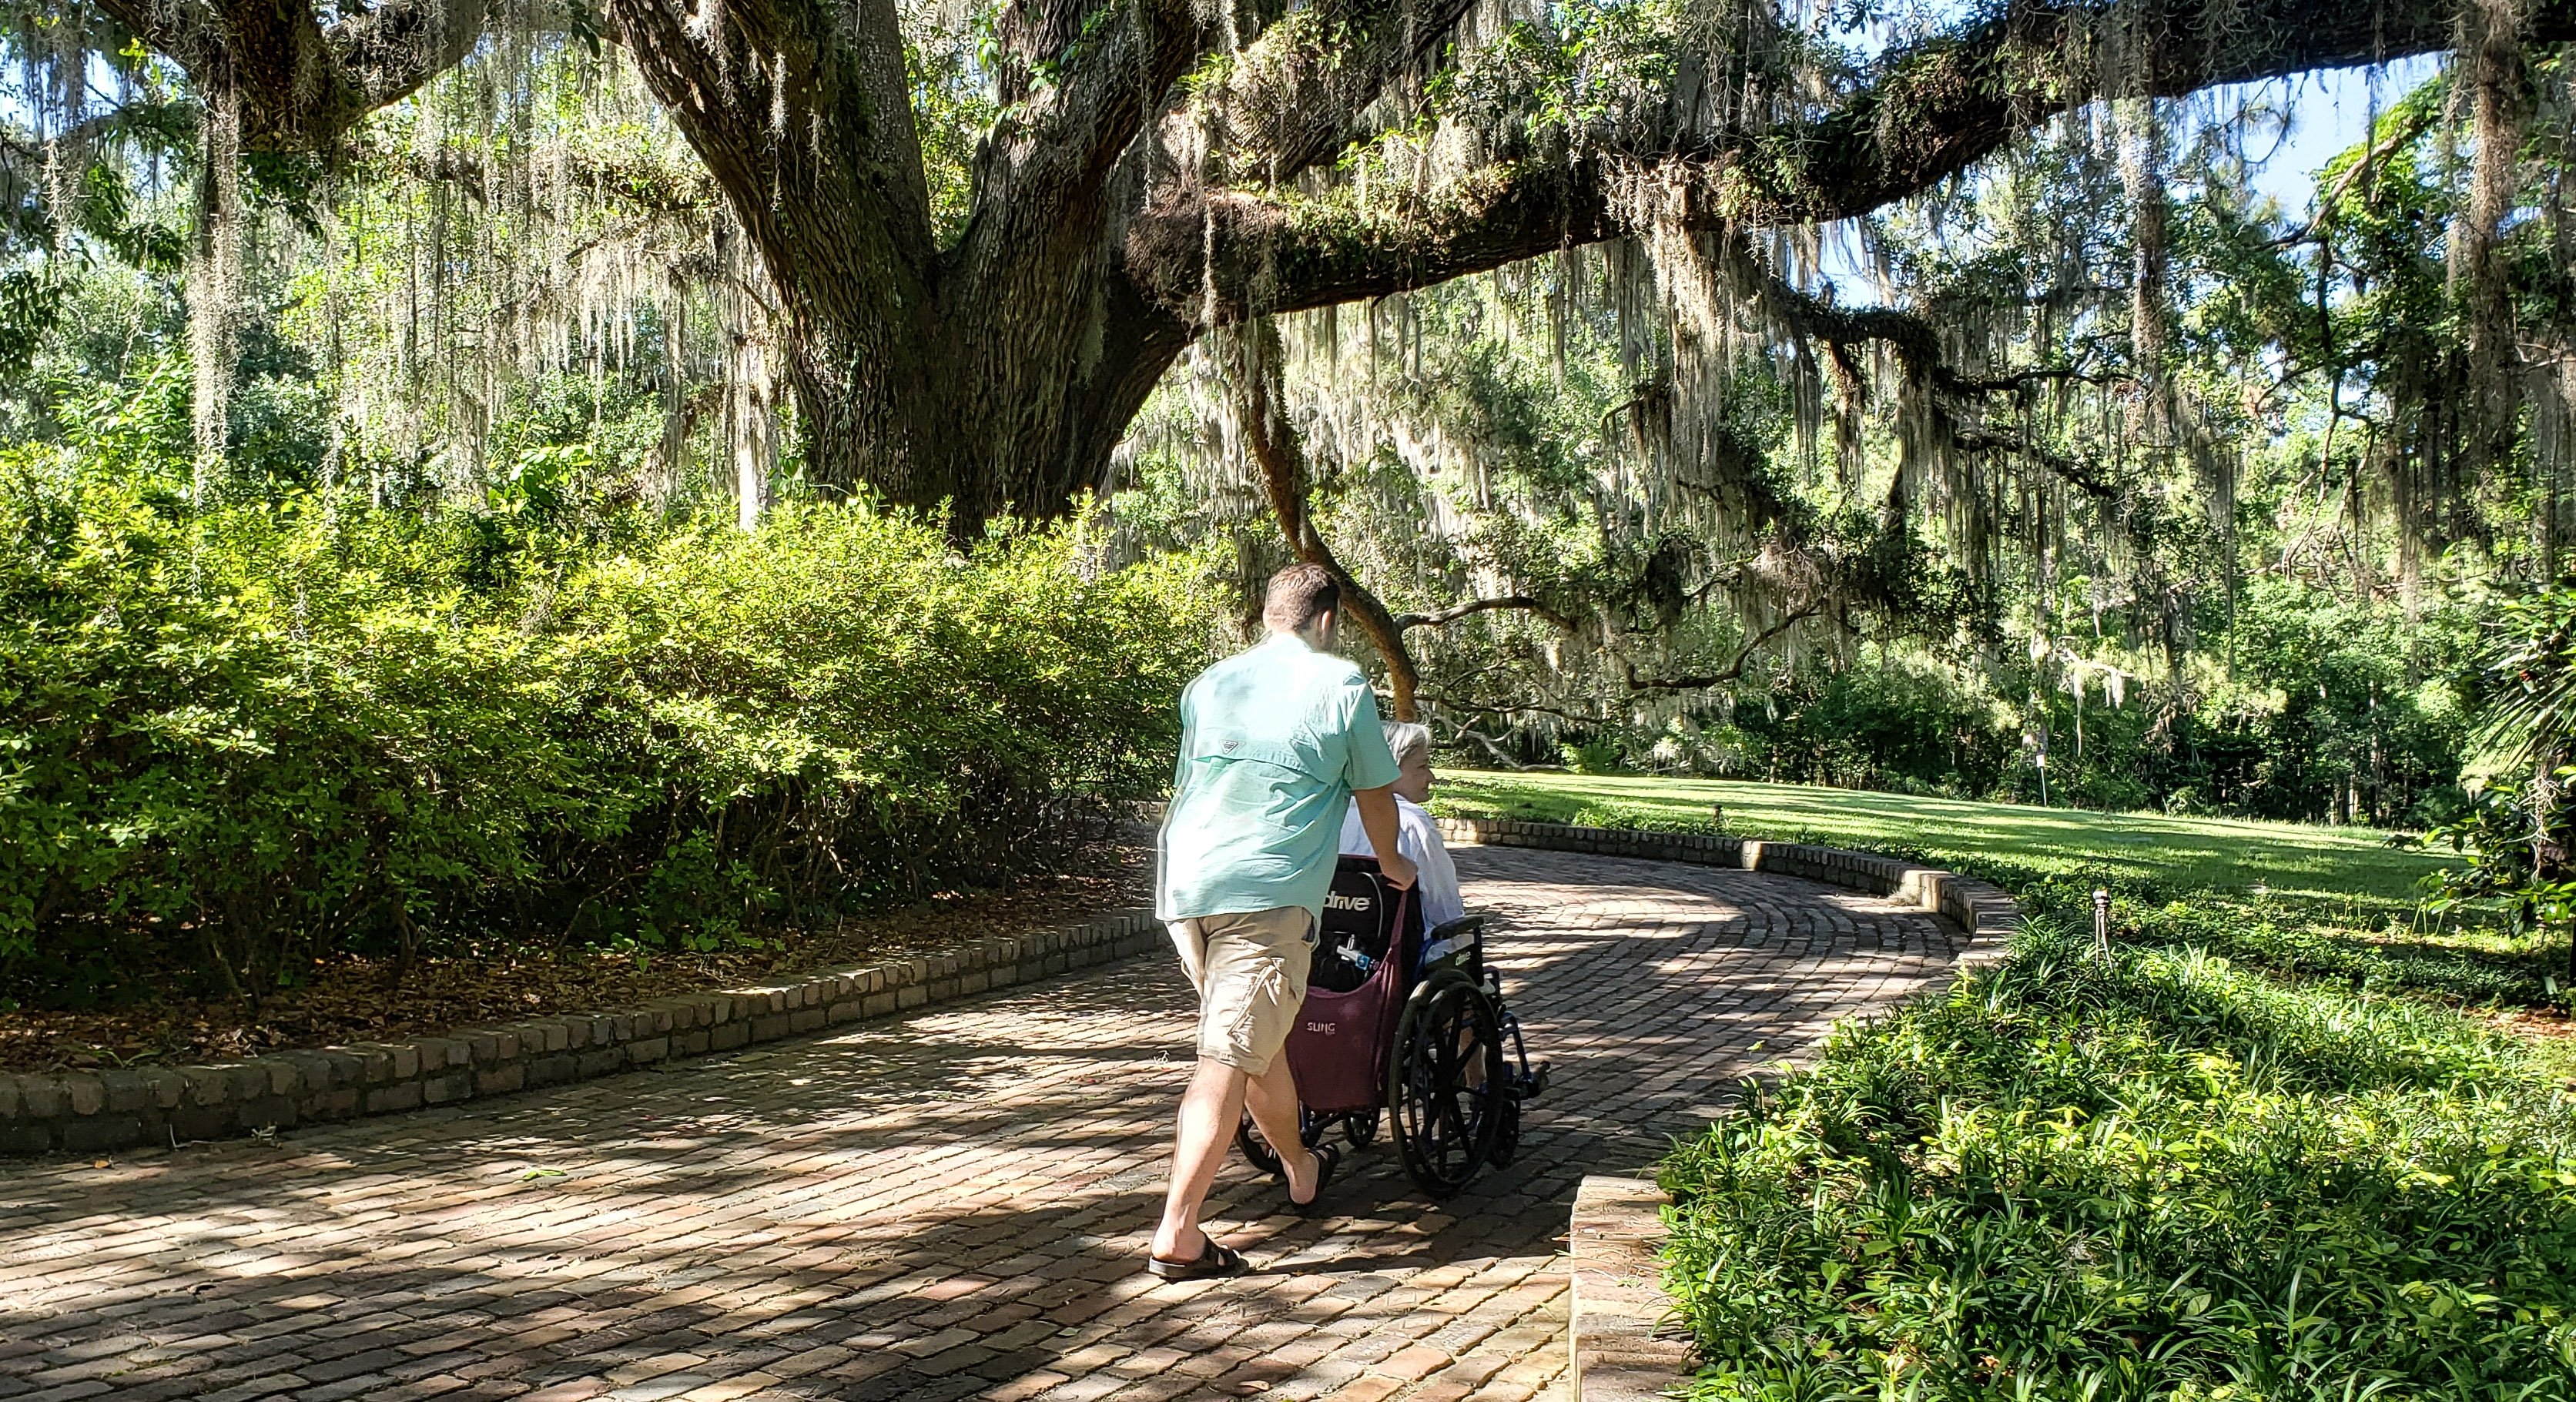 senior-citizen-in-a-wheelchair-being-pushed-through-a-brick-pathway